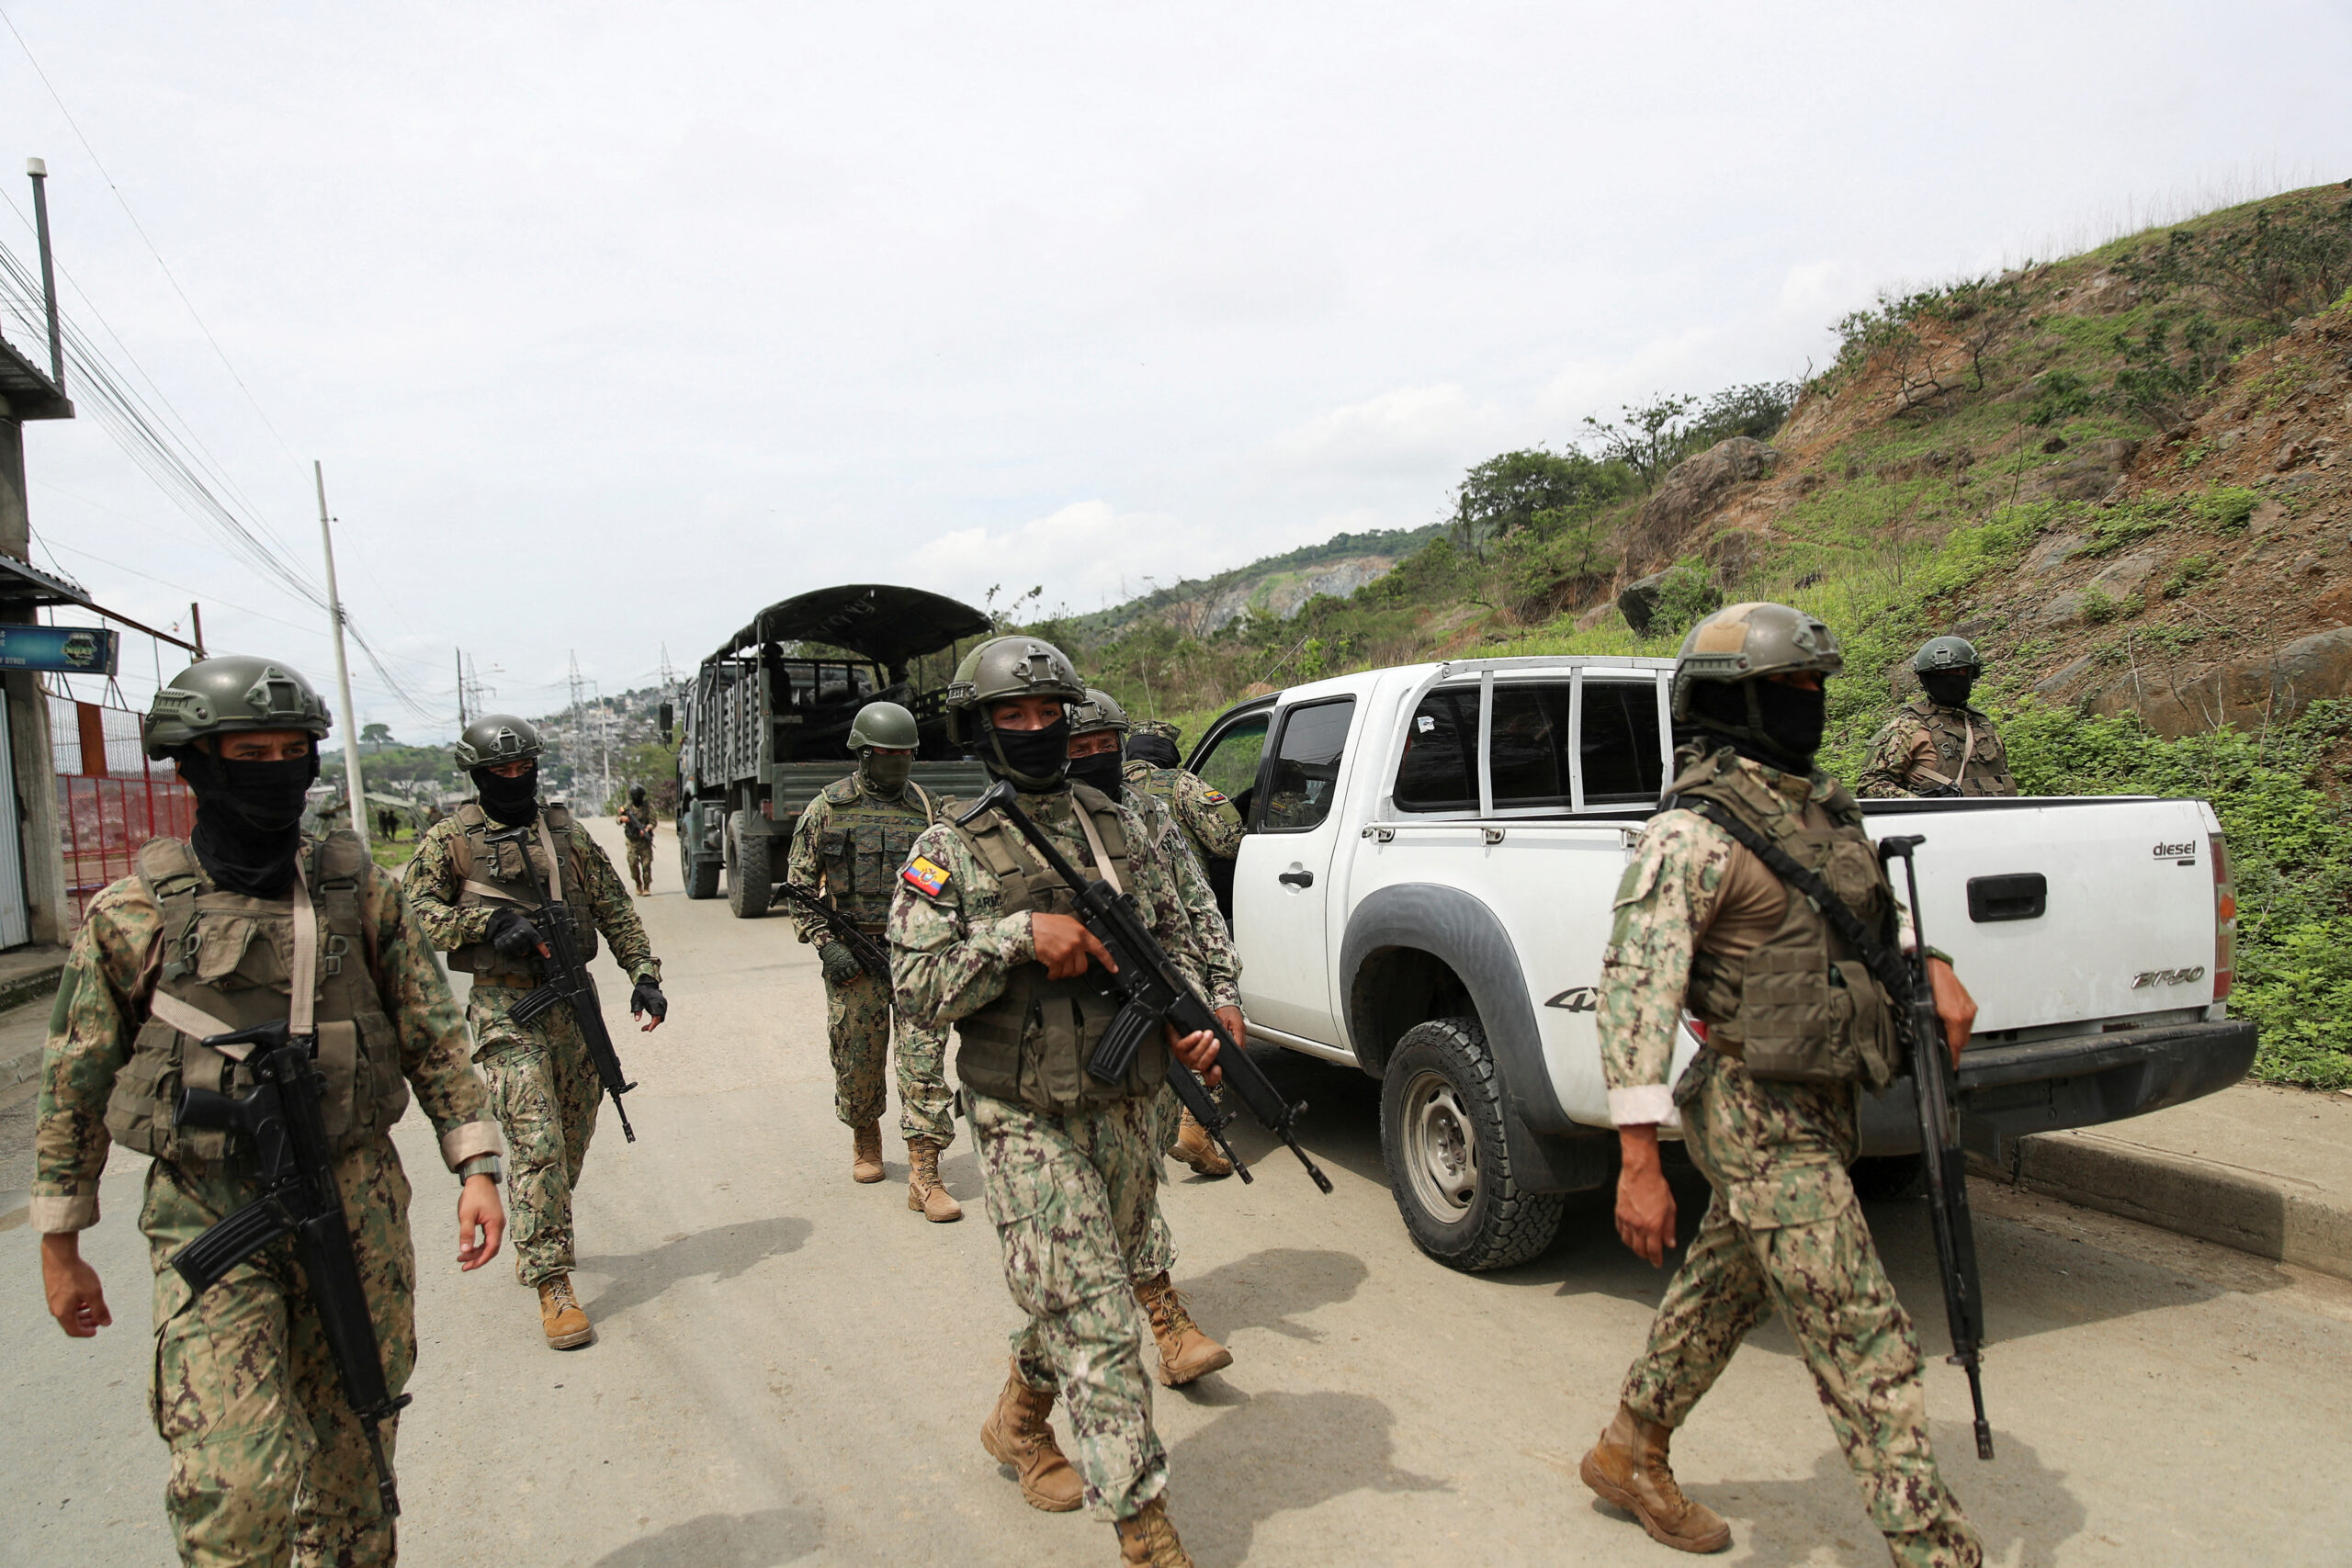 Dozens of prisoners escape Ecuador jail amid military operations